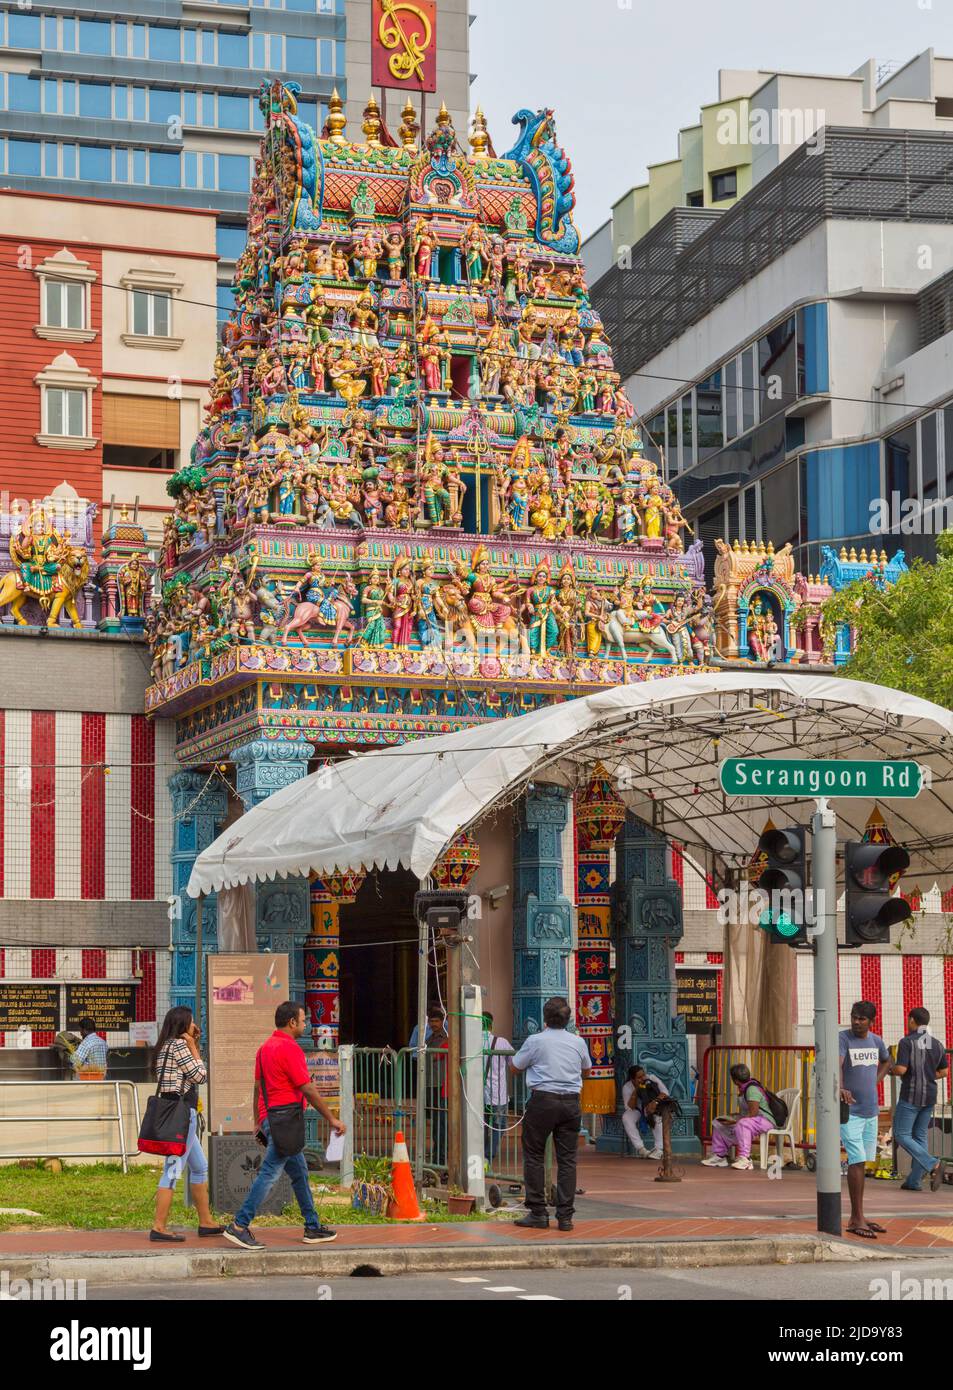 Sri Veeramakaliamman Temple, Serangoon Road, Little India, Republik Singapur. Dieser Hindu-Tempel ist einer der ältesten in Singapur. Es ist dedicat Stockfoto